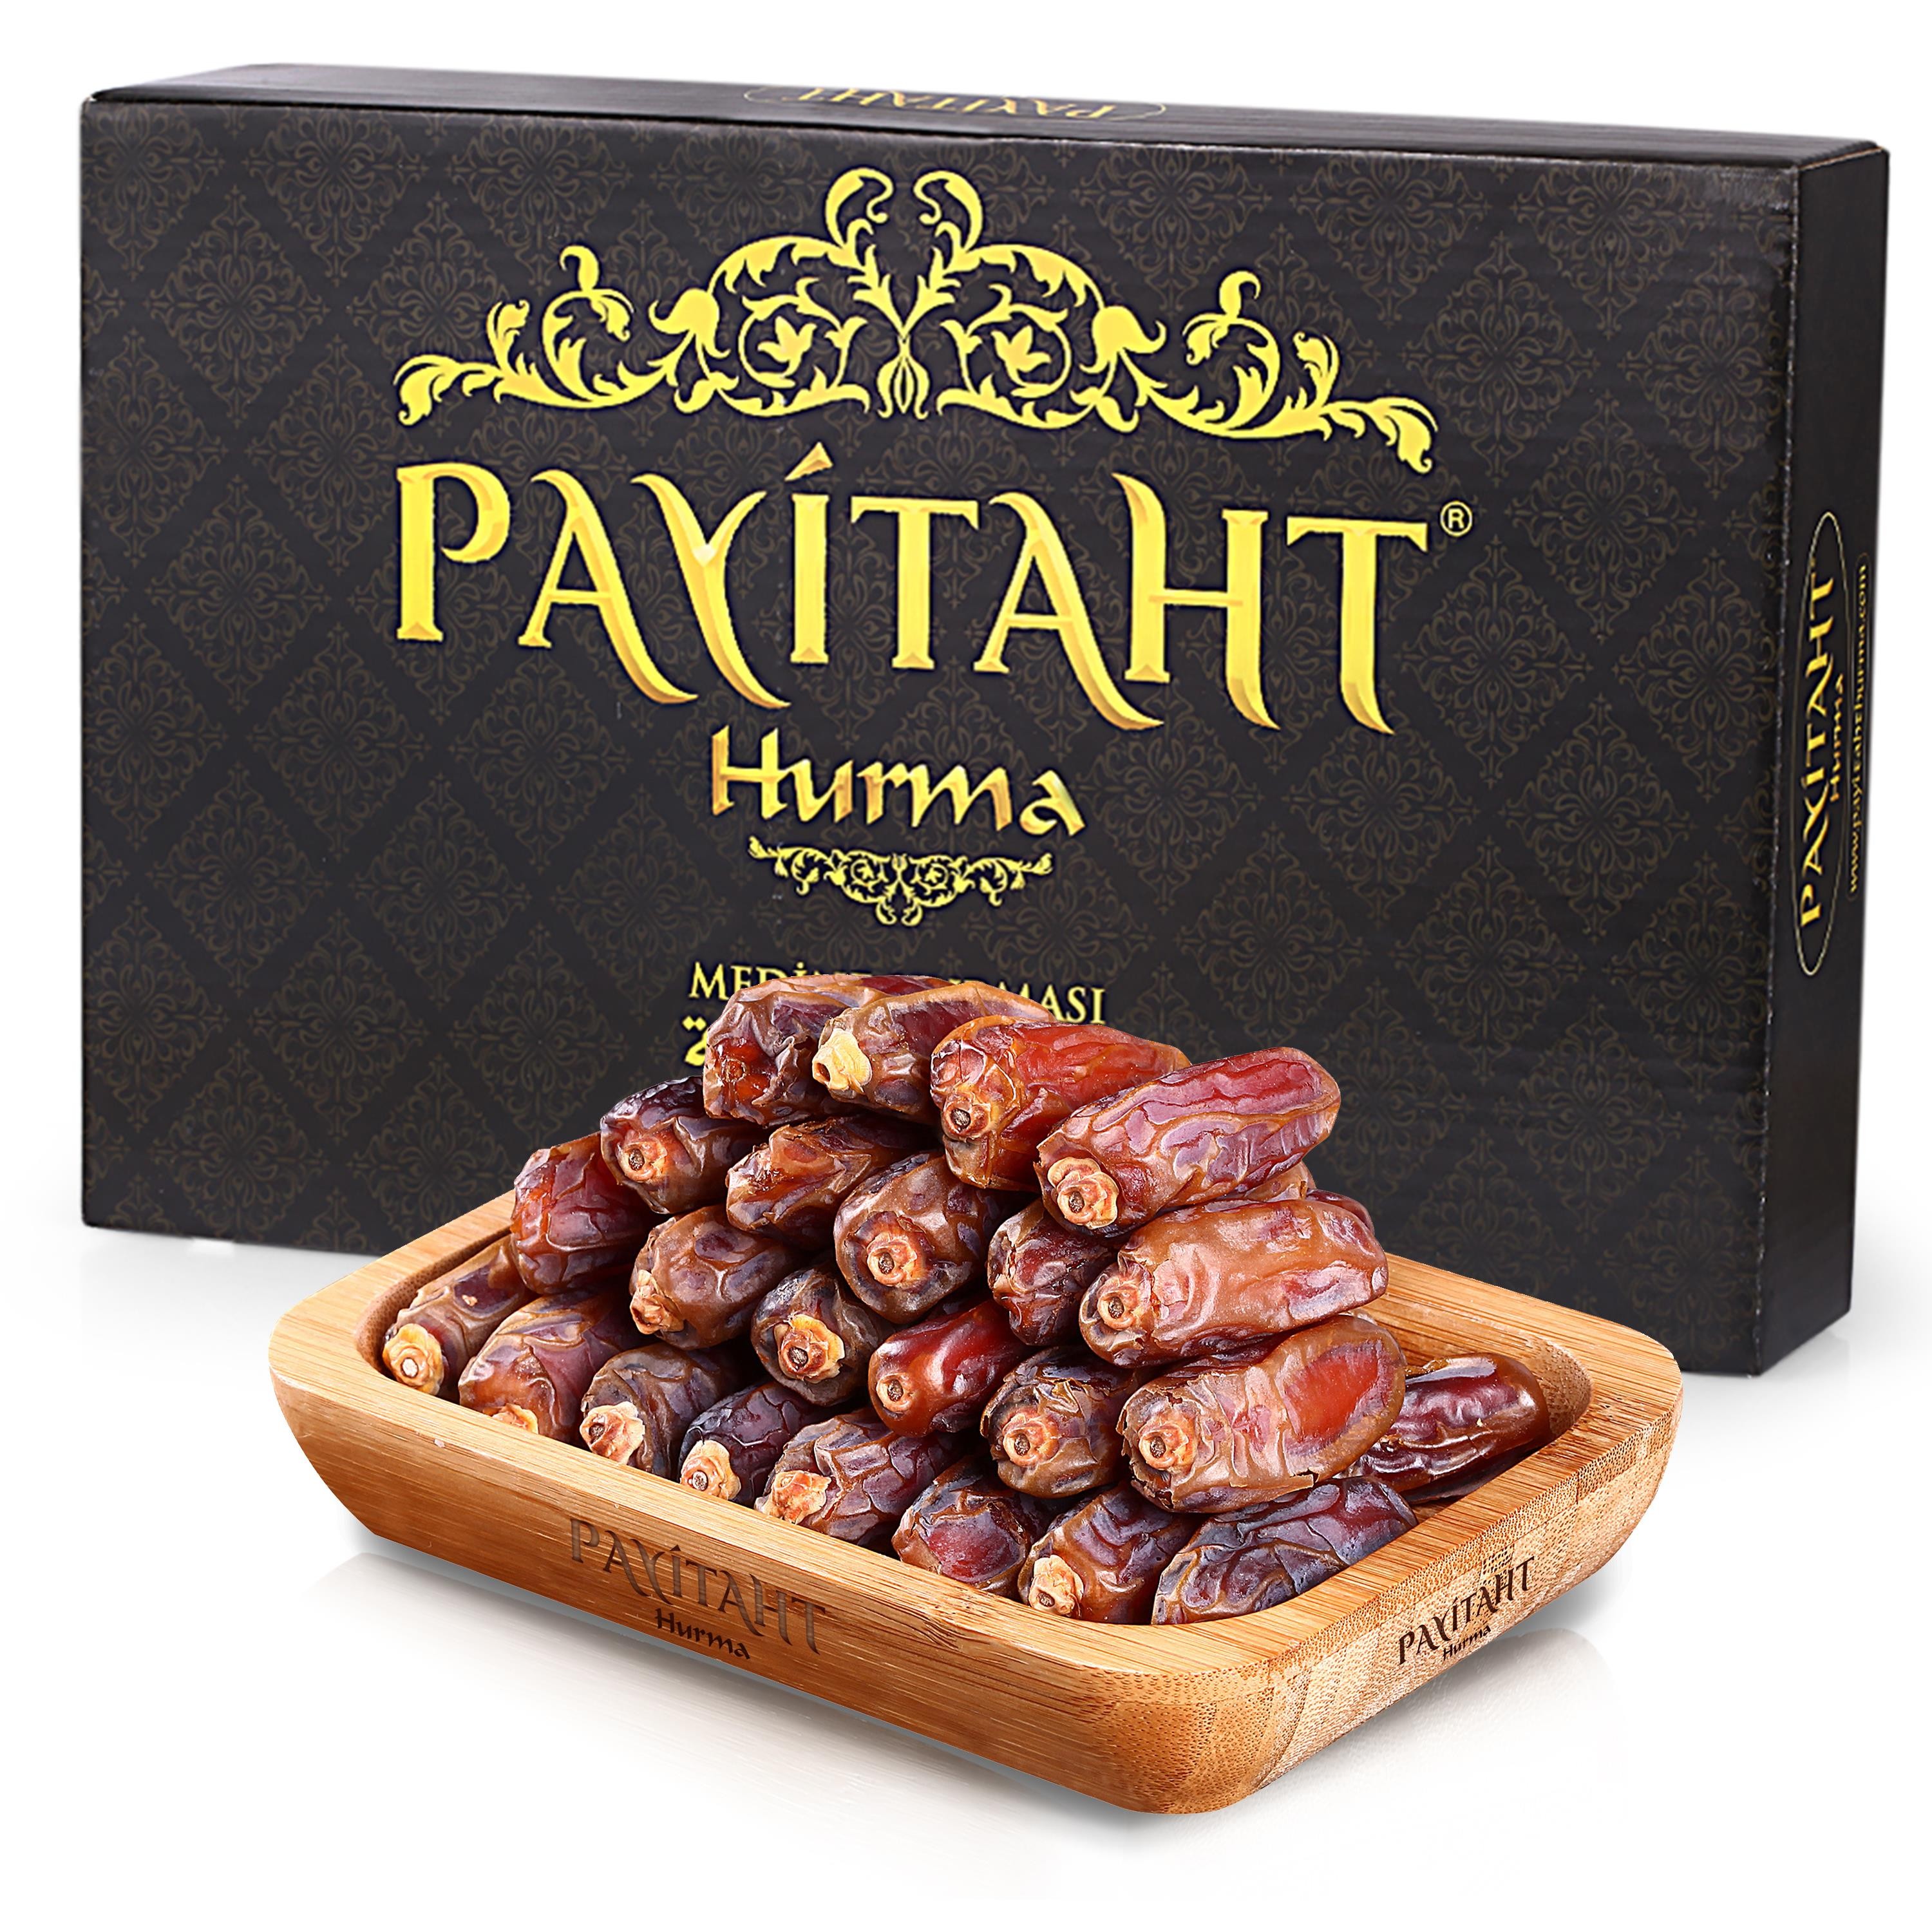 Payitaht Hurma Medina Mebrum Meşruk Dates New Harvest 5kg Package